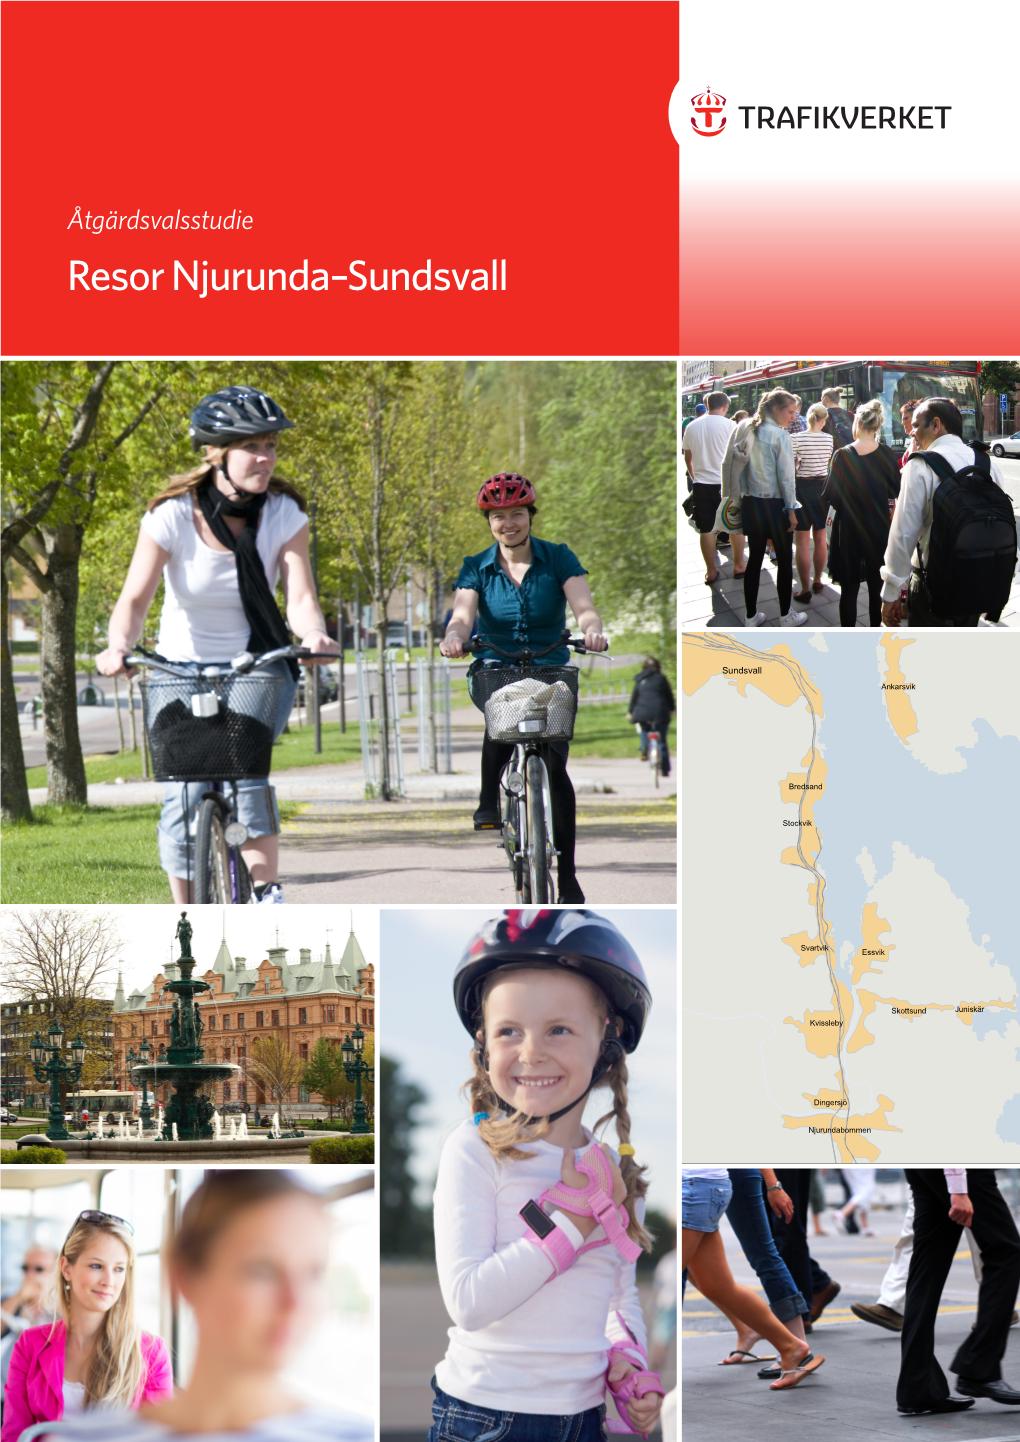 Resor Njurunda–Sundsvall